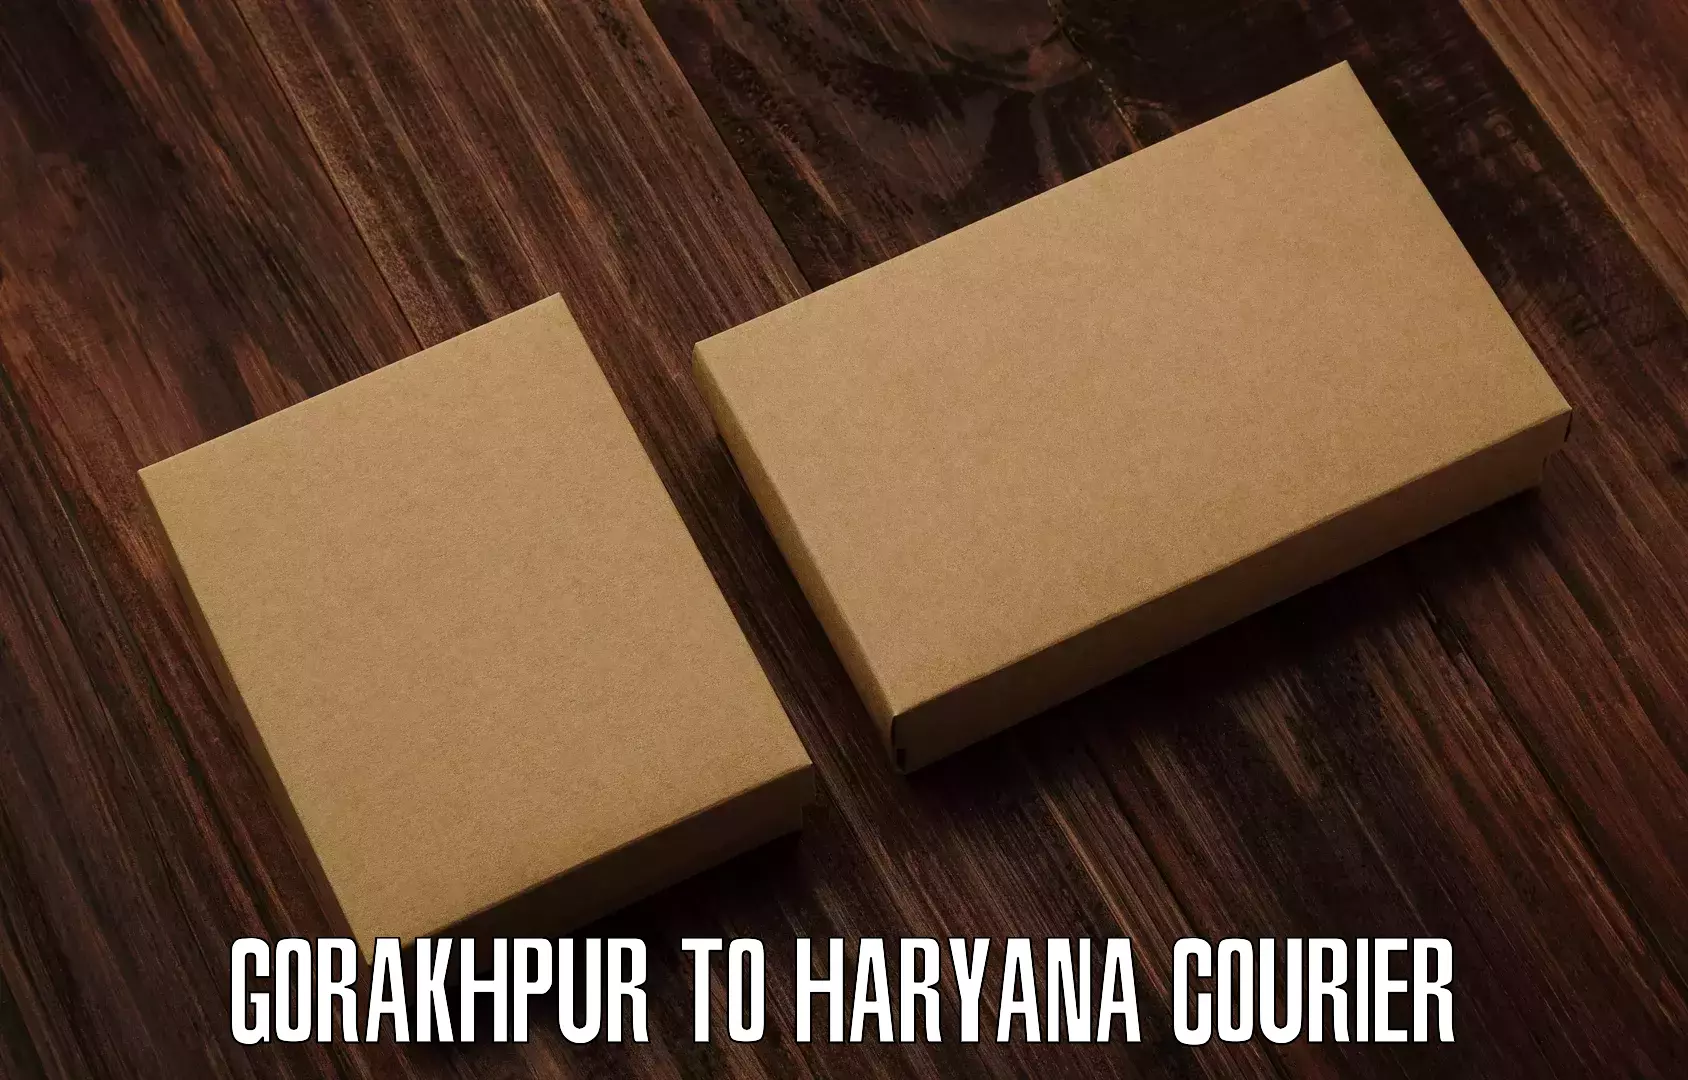 Cash on delivery service Gorakhpur to Gurgaon